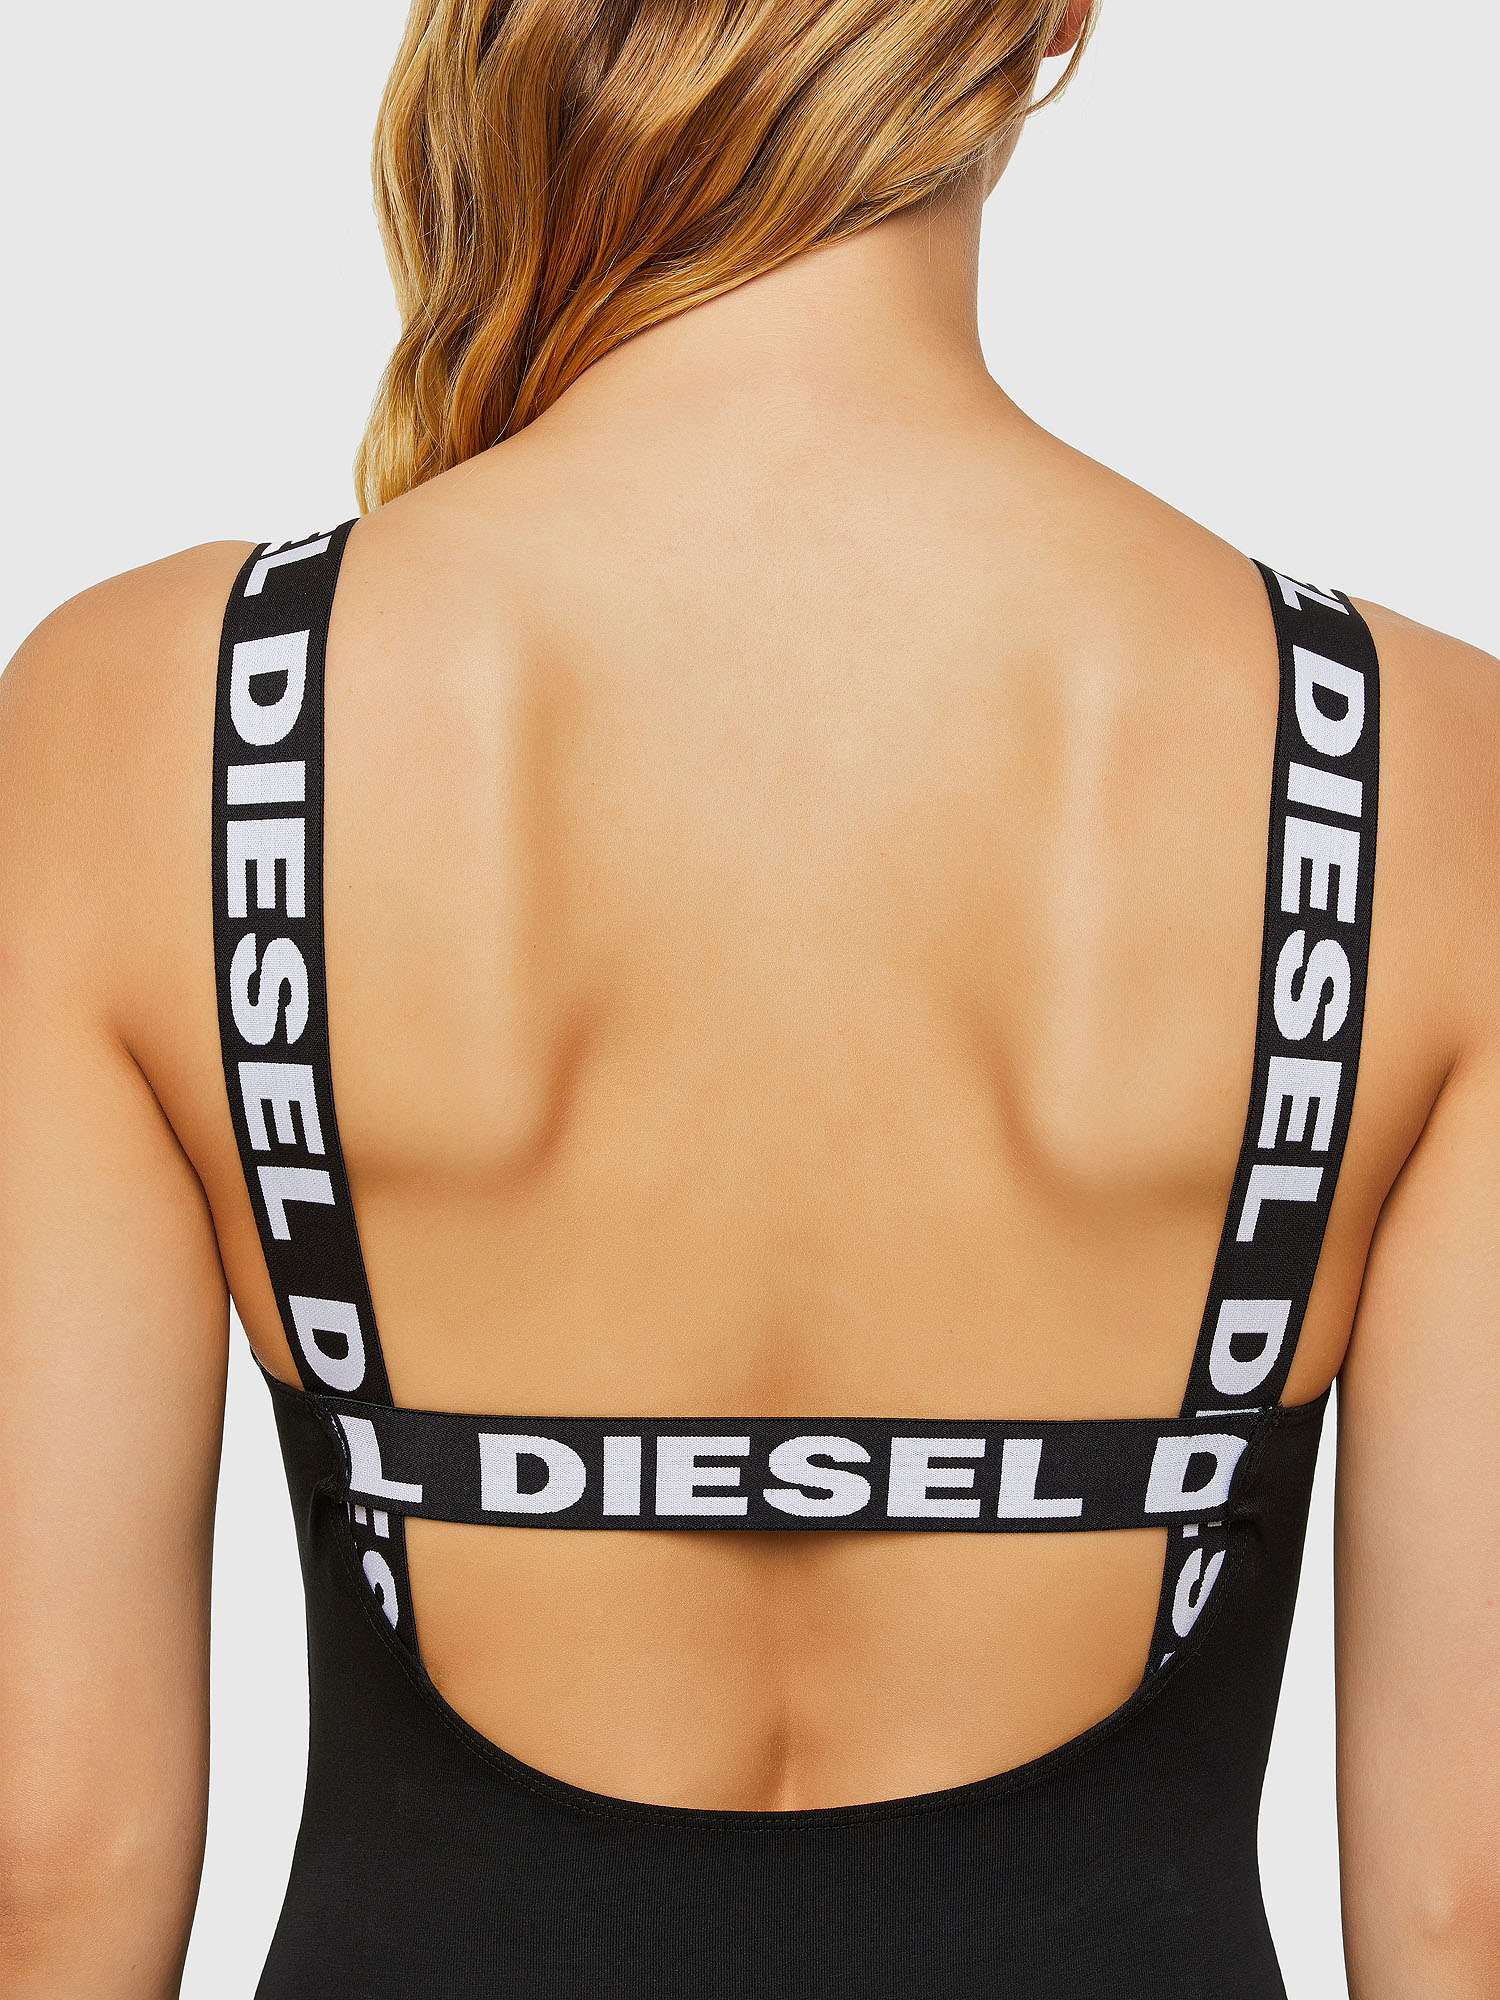 Diesel - UFBY-HOLLIX, Black - Image 3